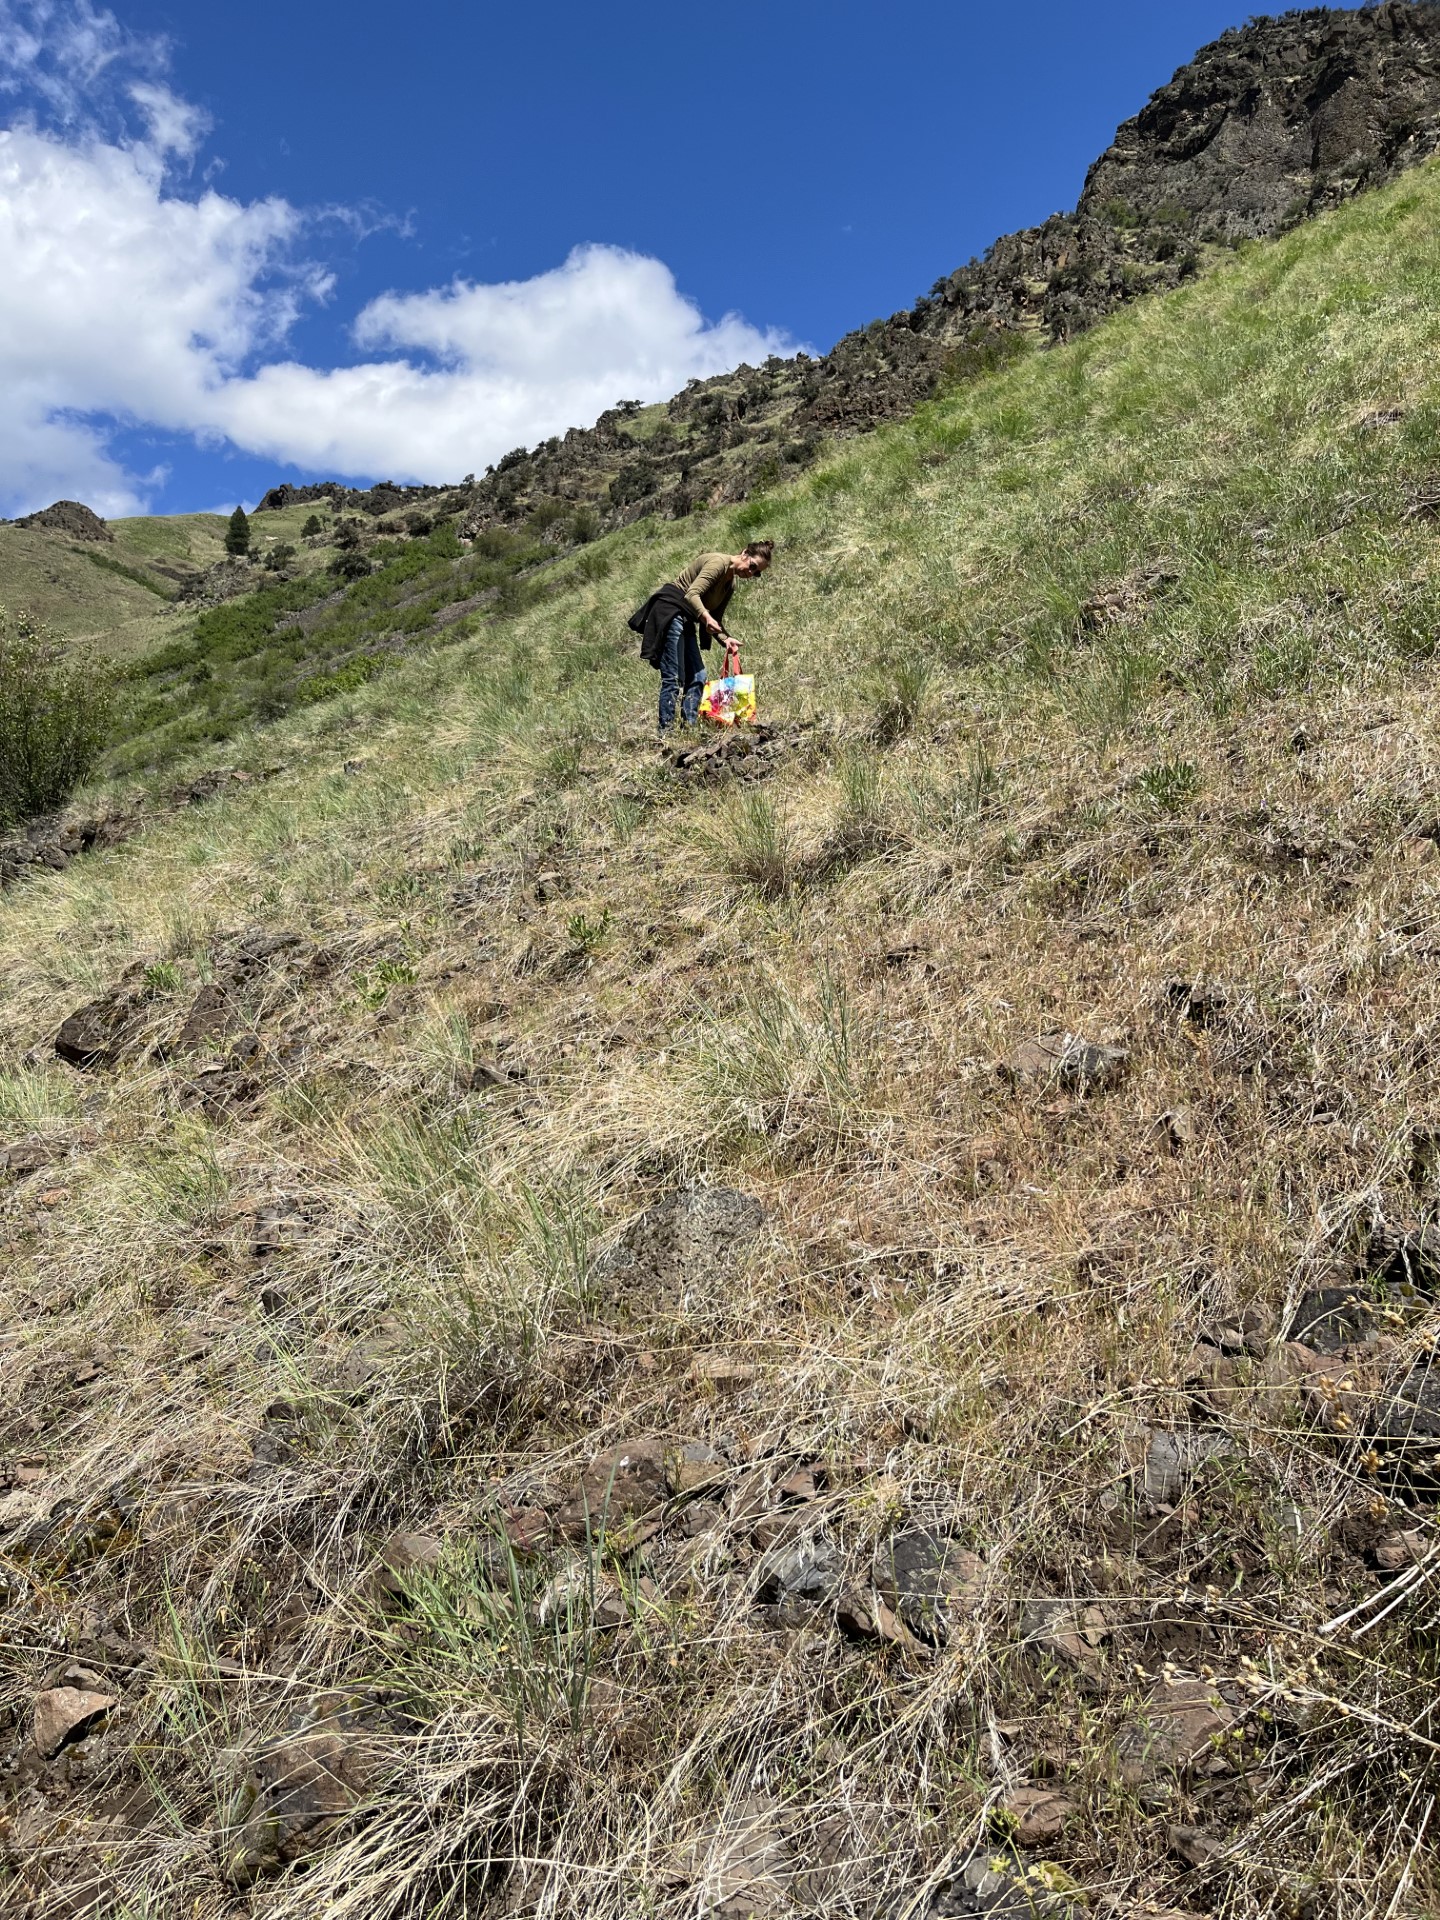 Image of Jules harvesting Skullcap on a steep hillside